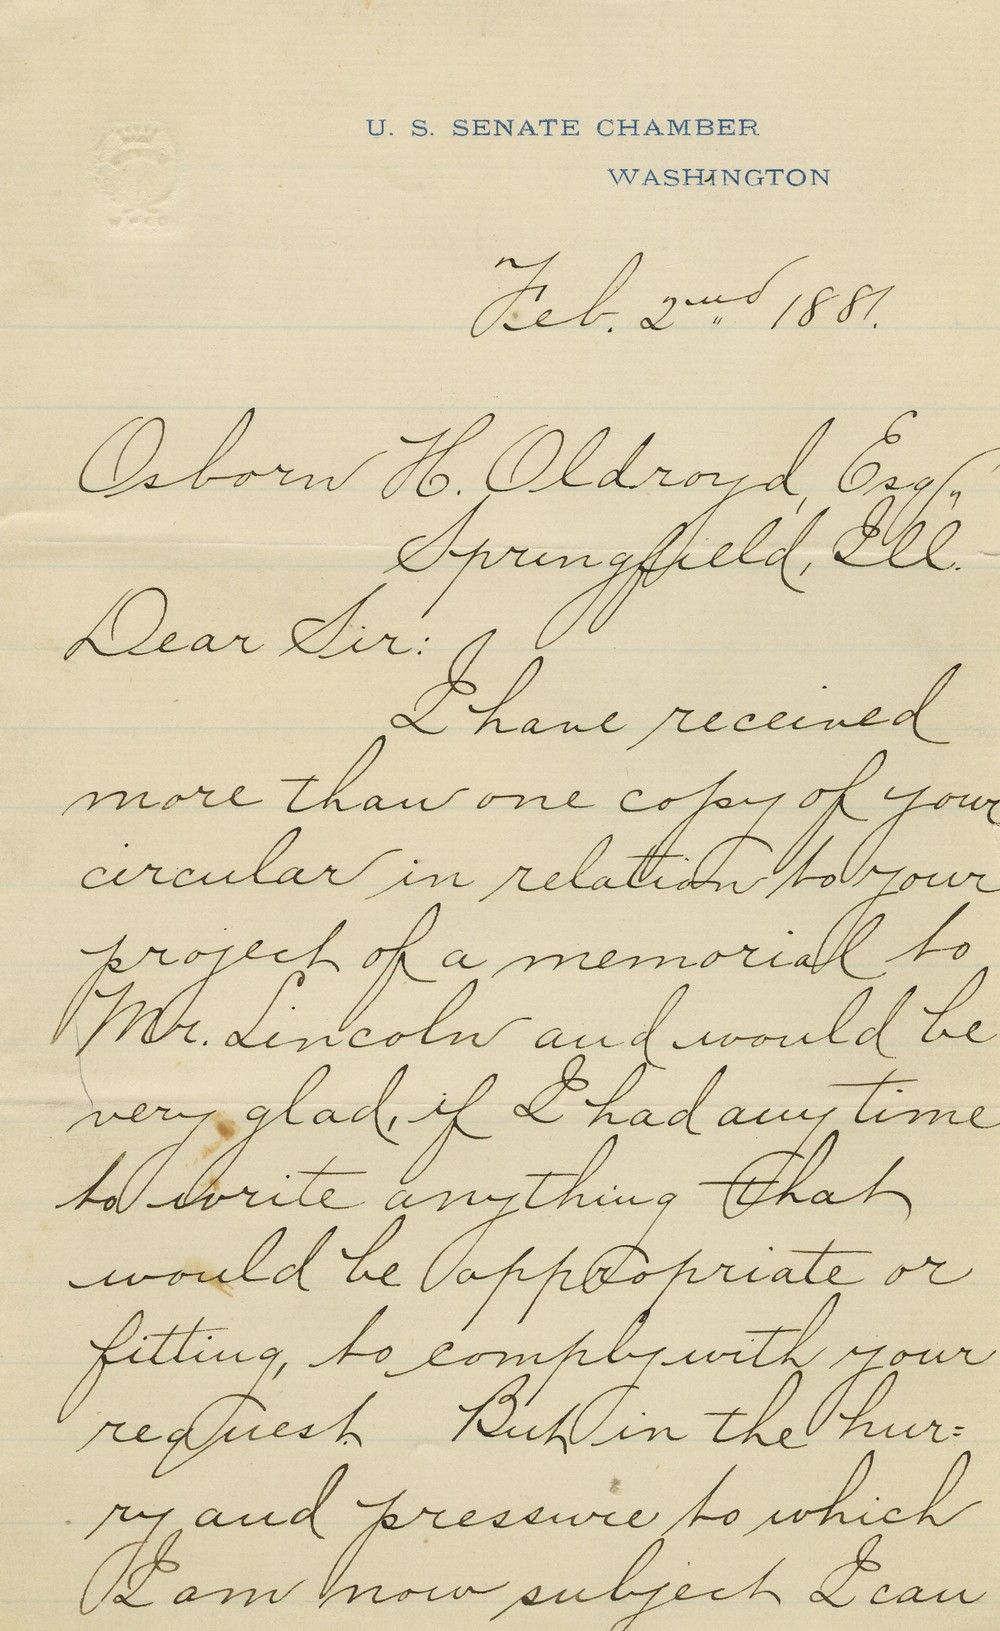 Senator Benjamin Harrison on Writing about the "Illustrious Lincoln"